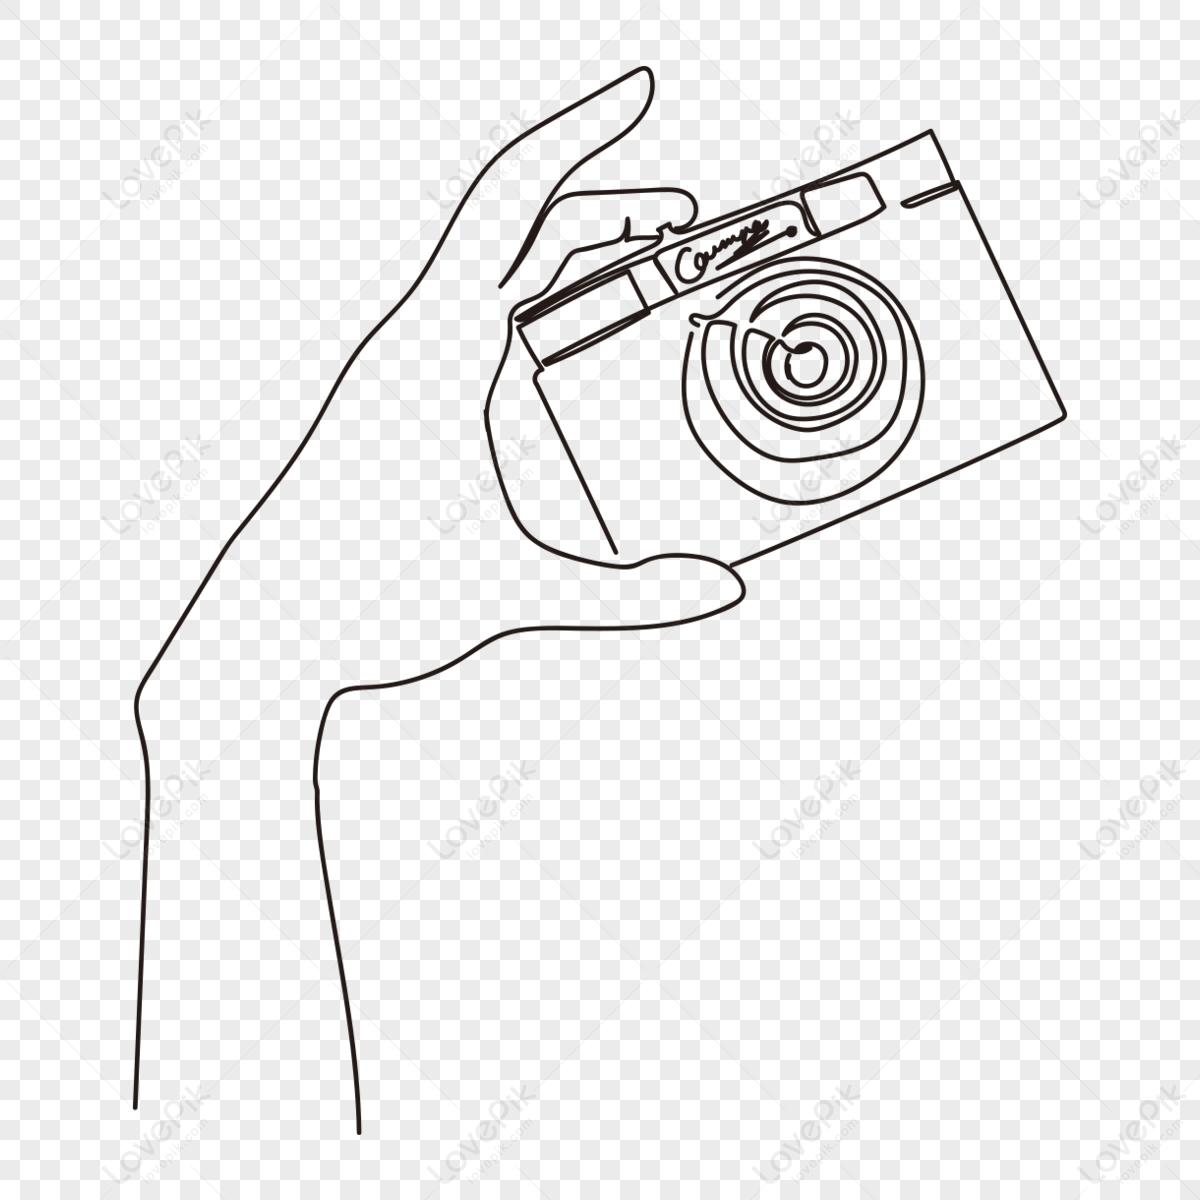 Digital Camera One Line Drawing. Illustration Gadget Technology. - Etsy